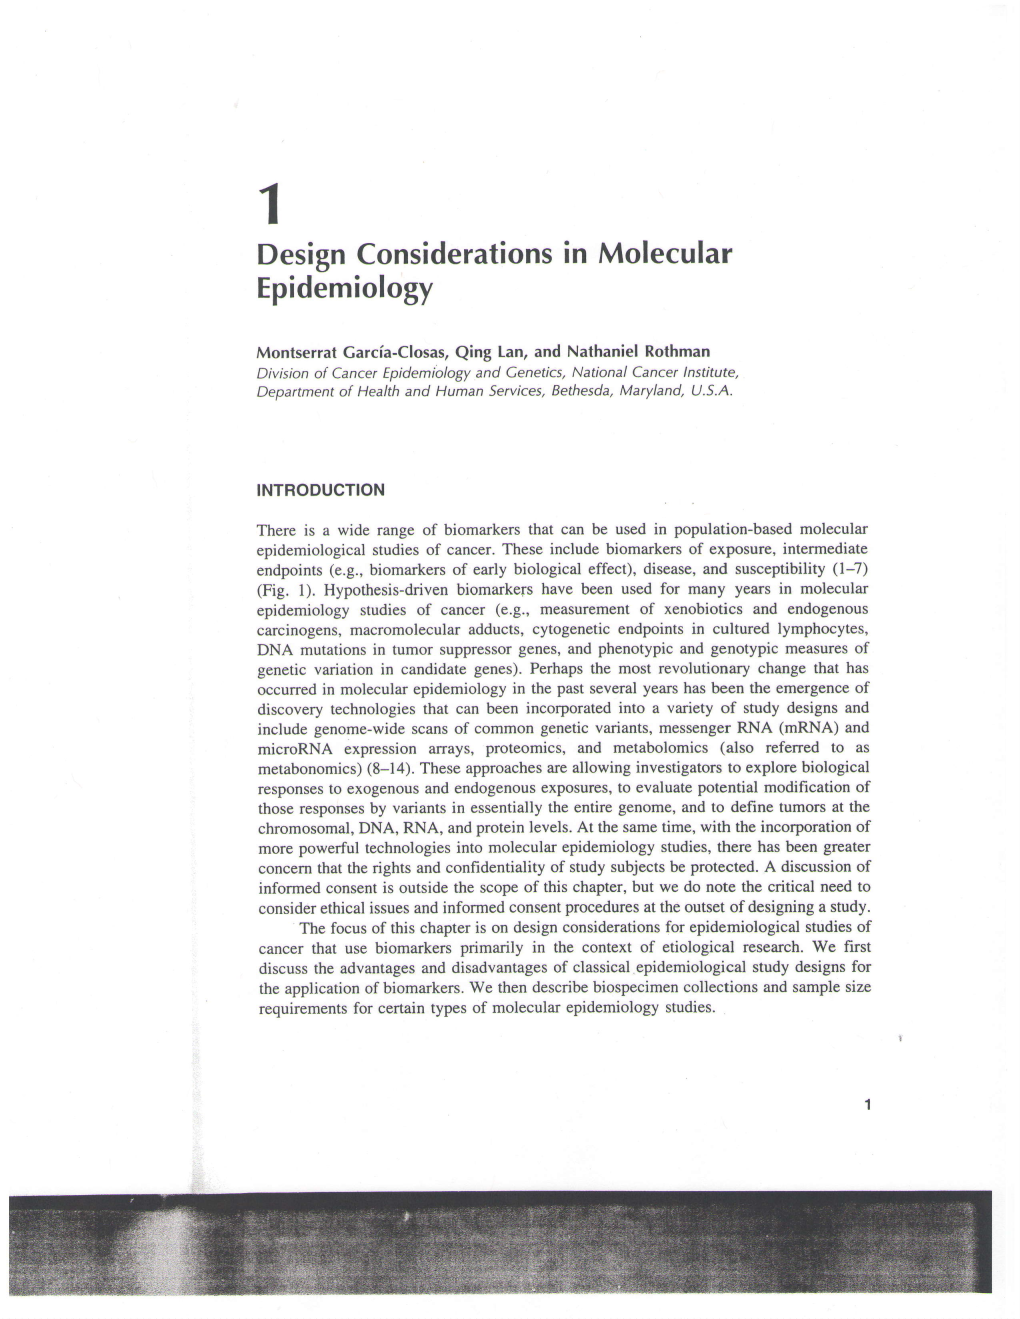 Design Considerations in Molecular Epidemiology